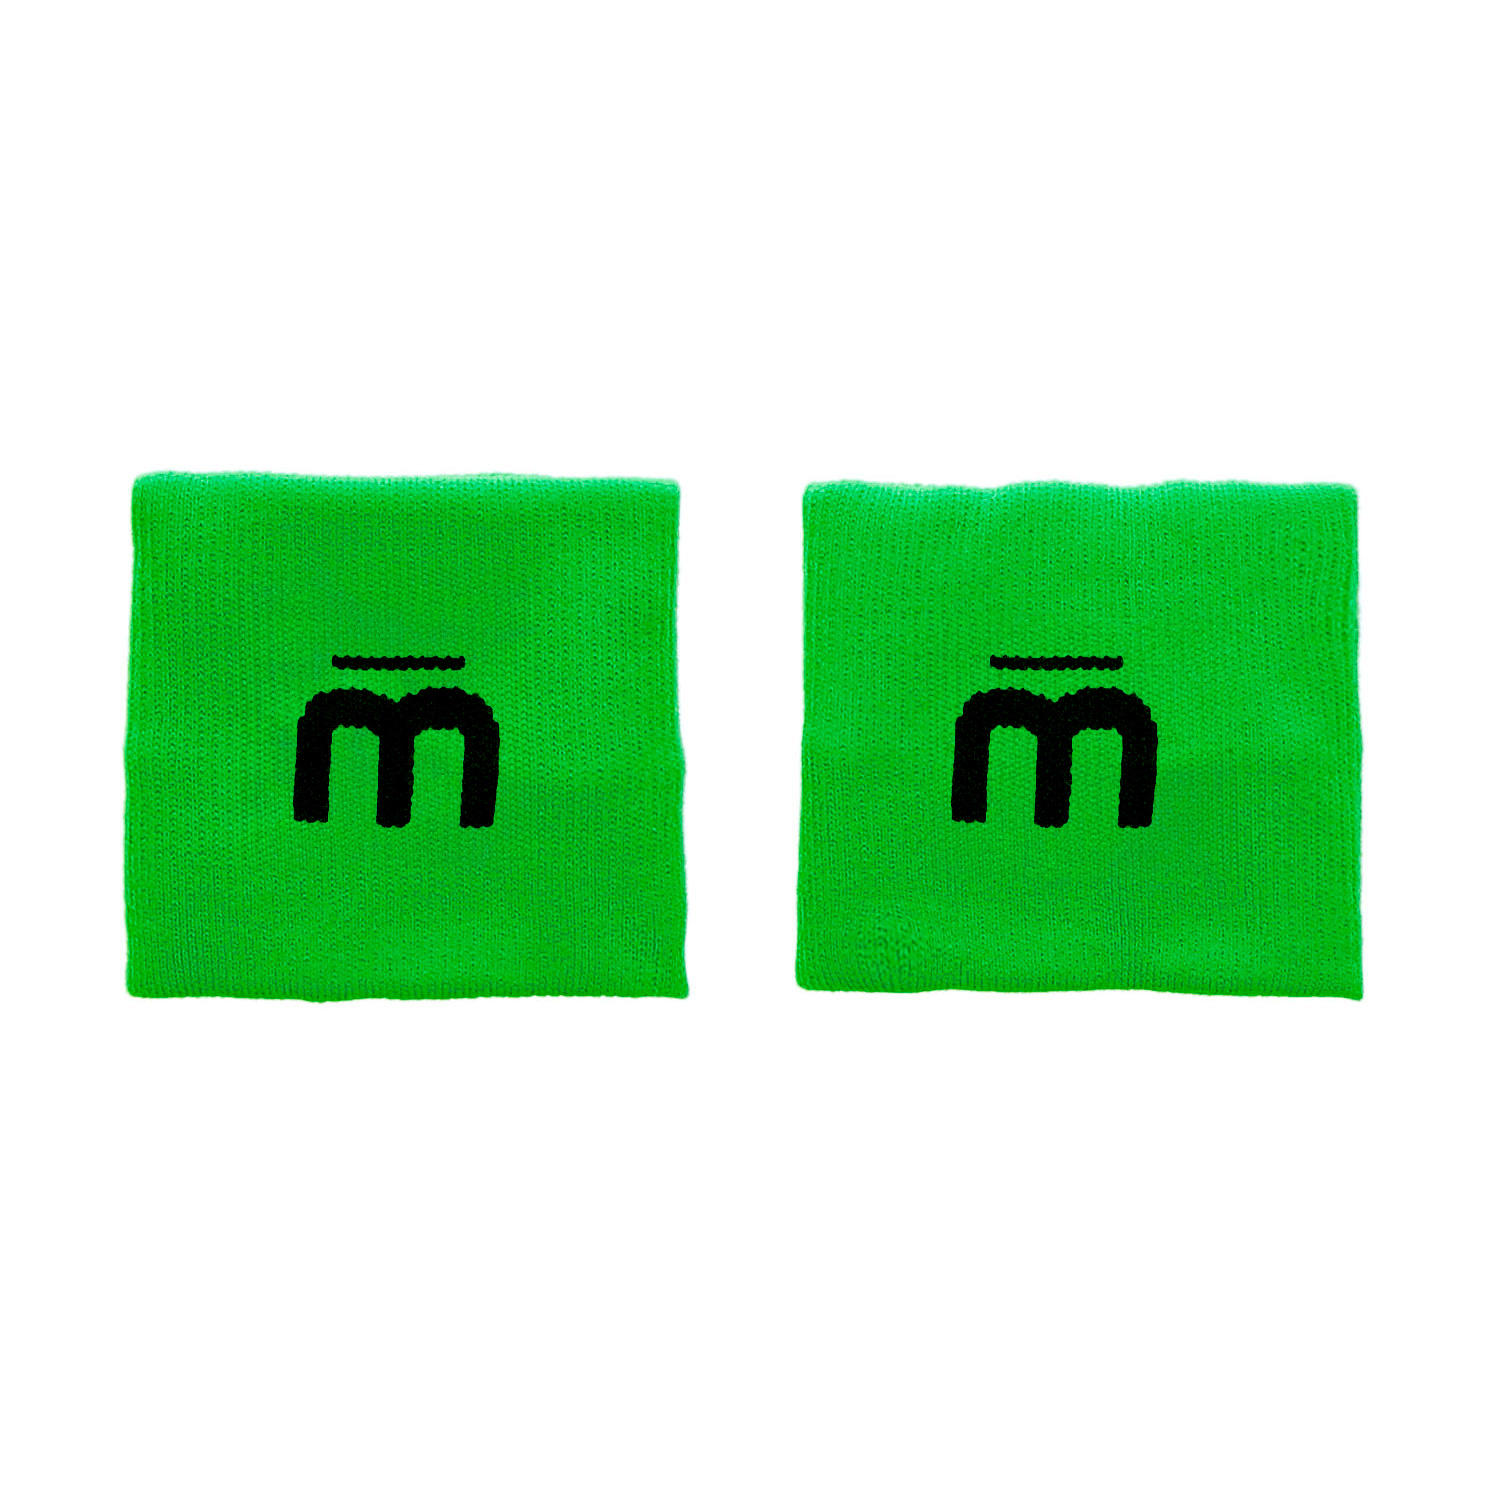 Mico Logo Polsini Corti - Verde Fluo